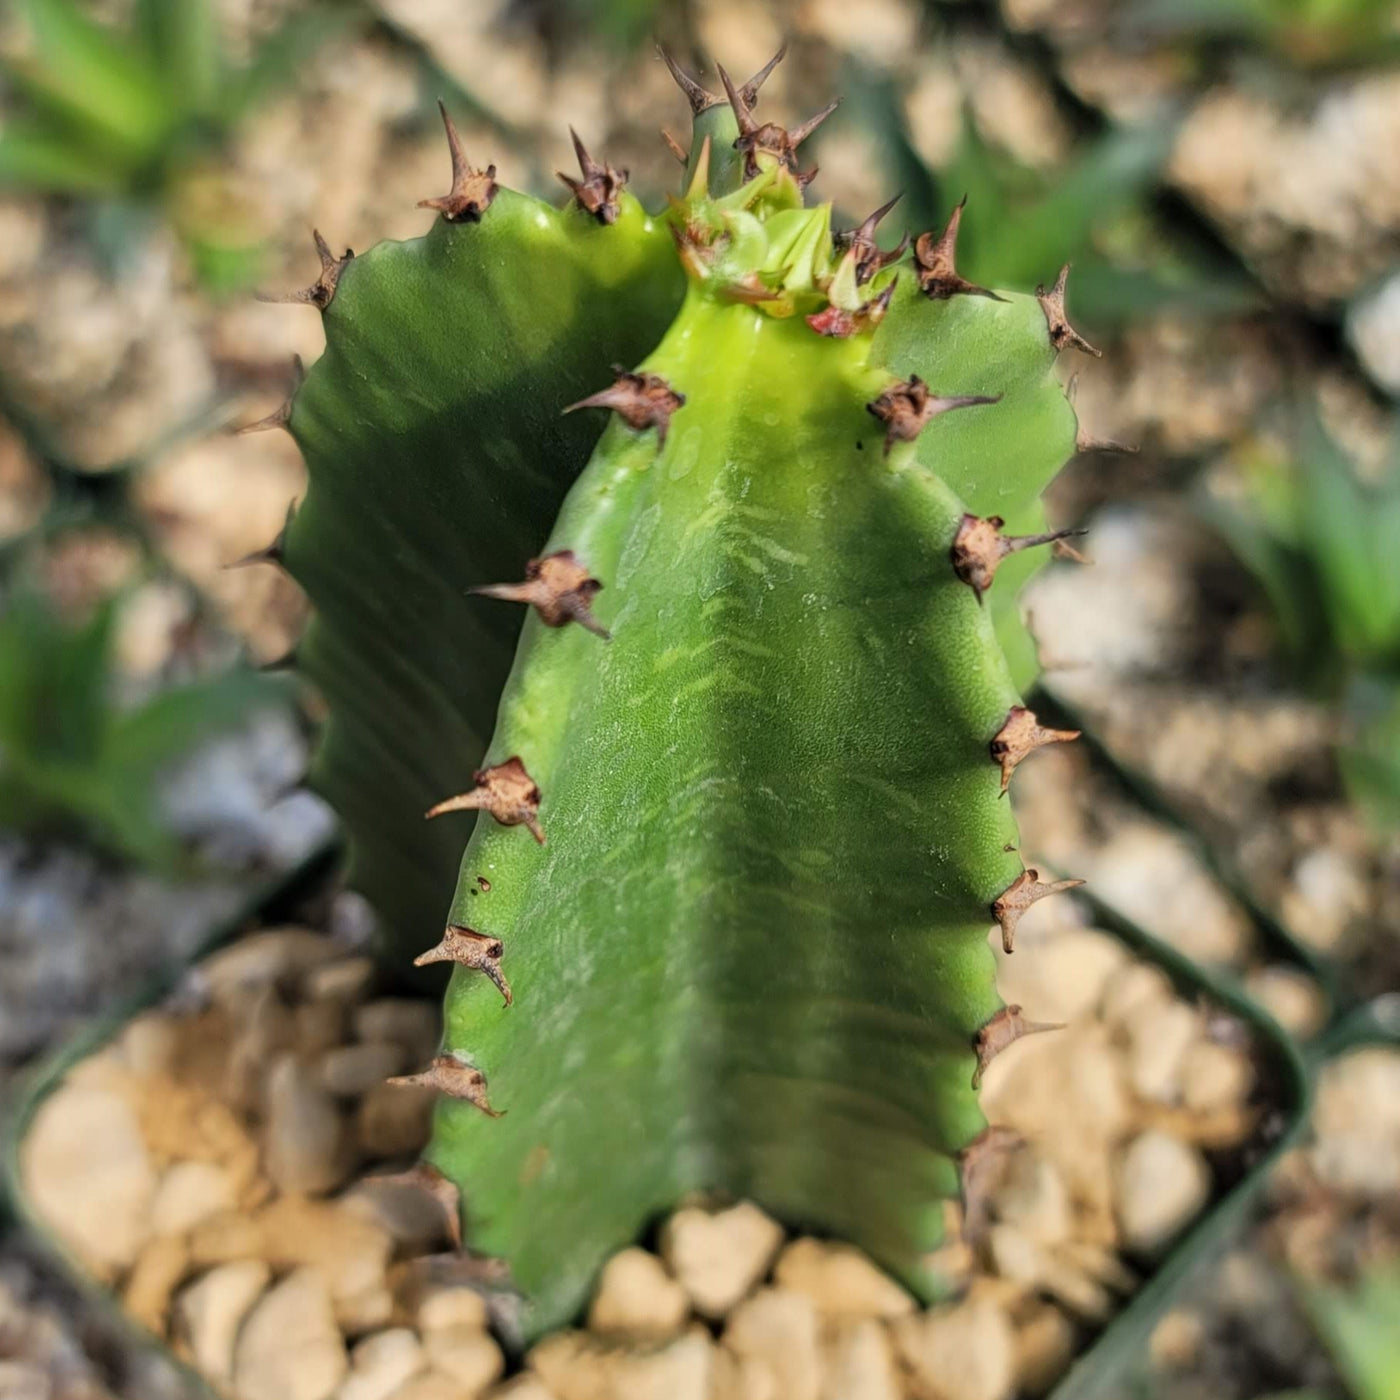 Chocolate Drop Cactus - Euphorbia ingens 'Chocolate Drop'